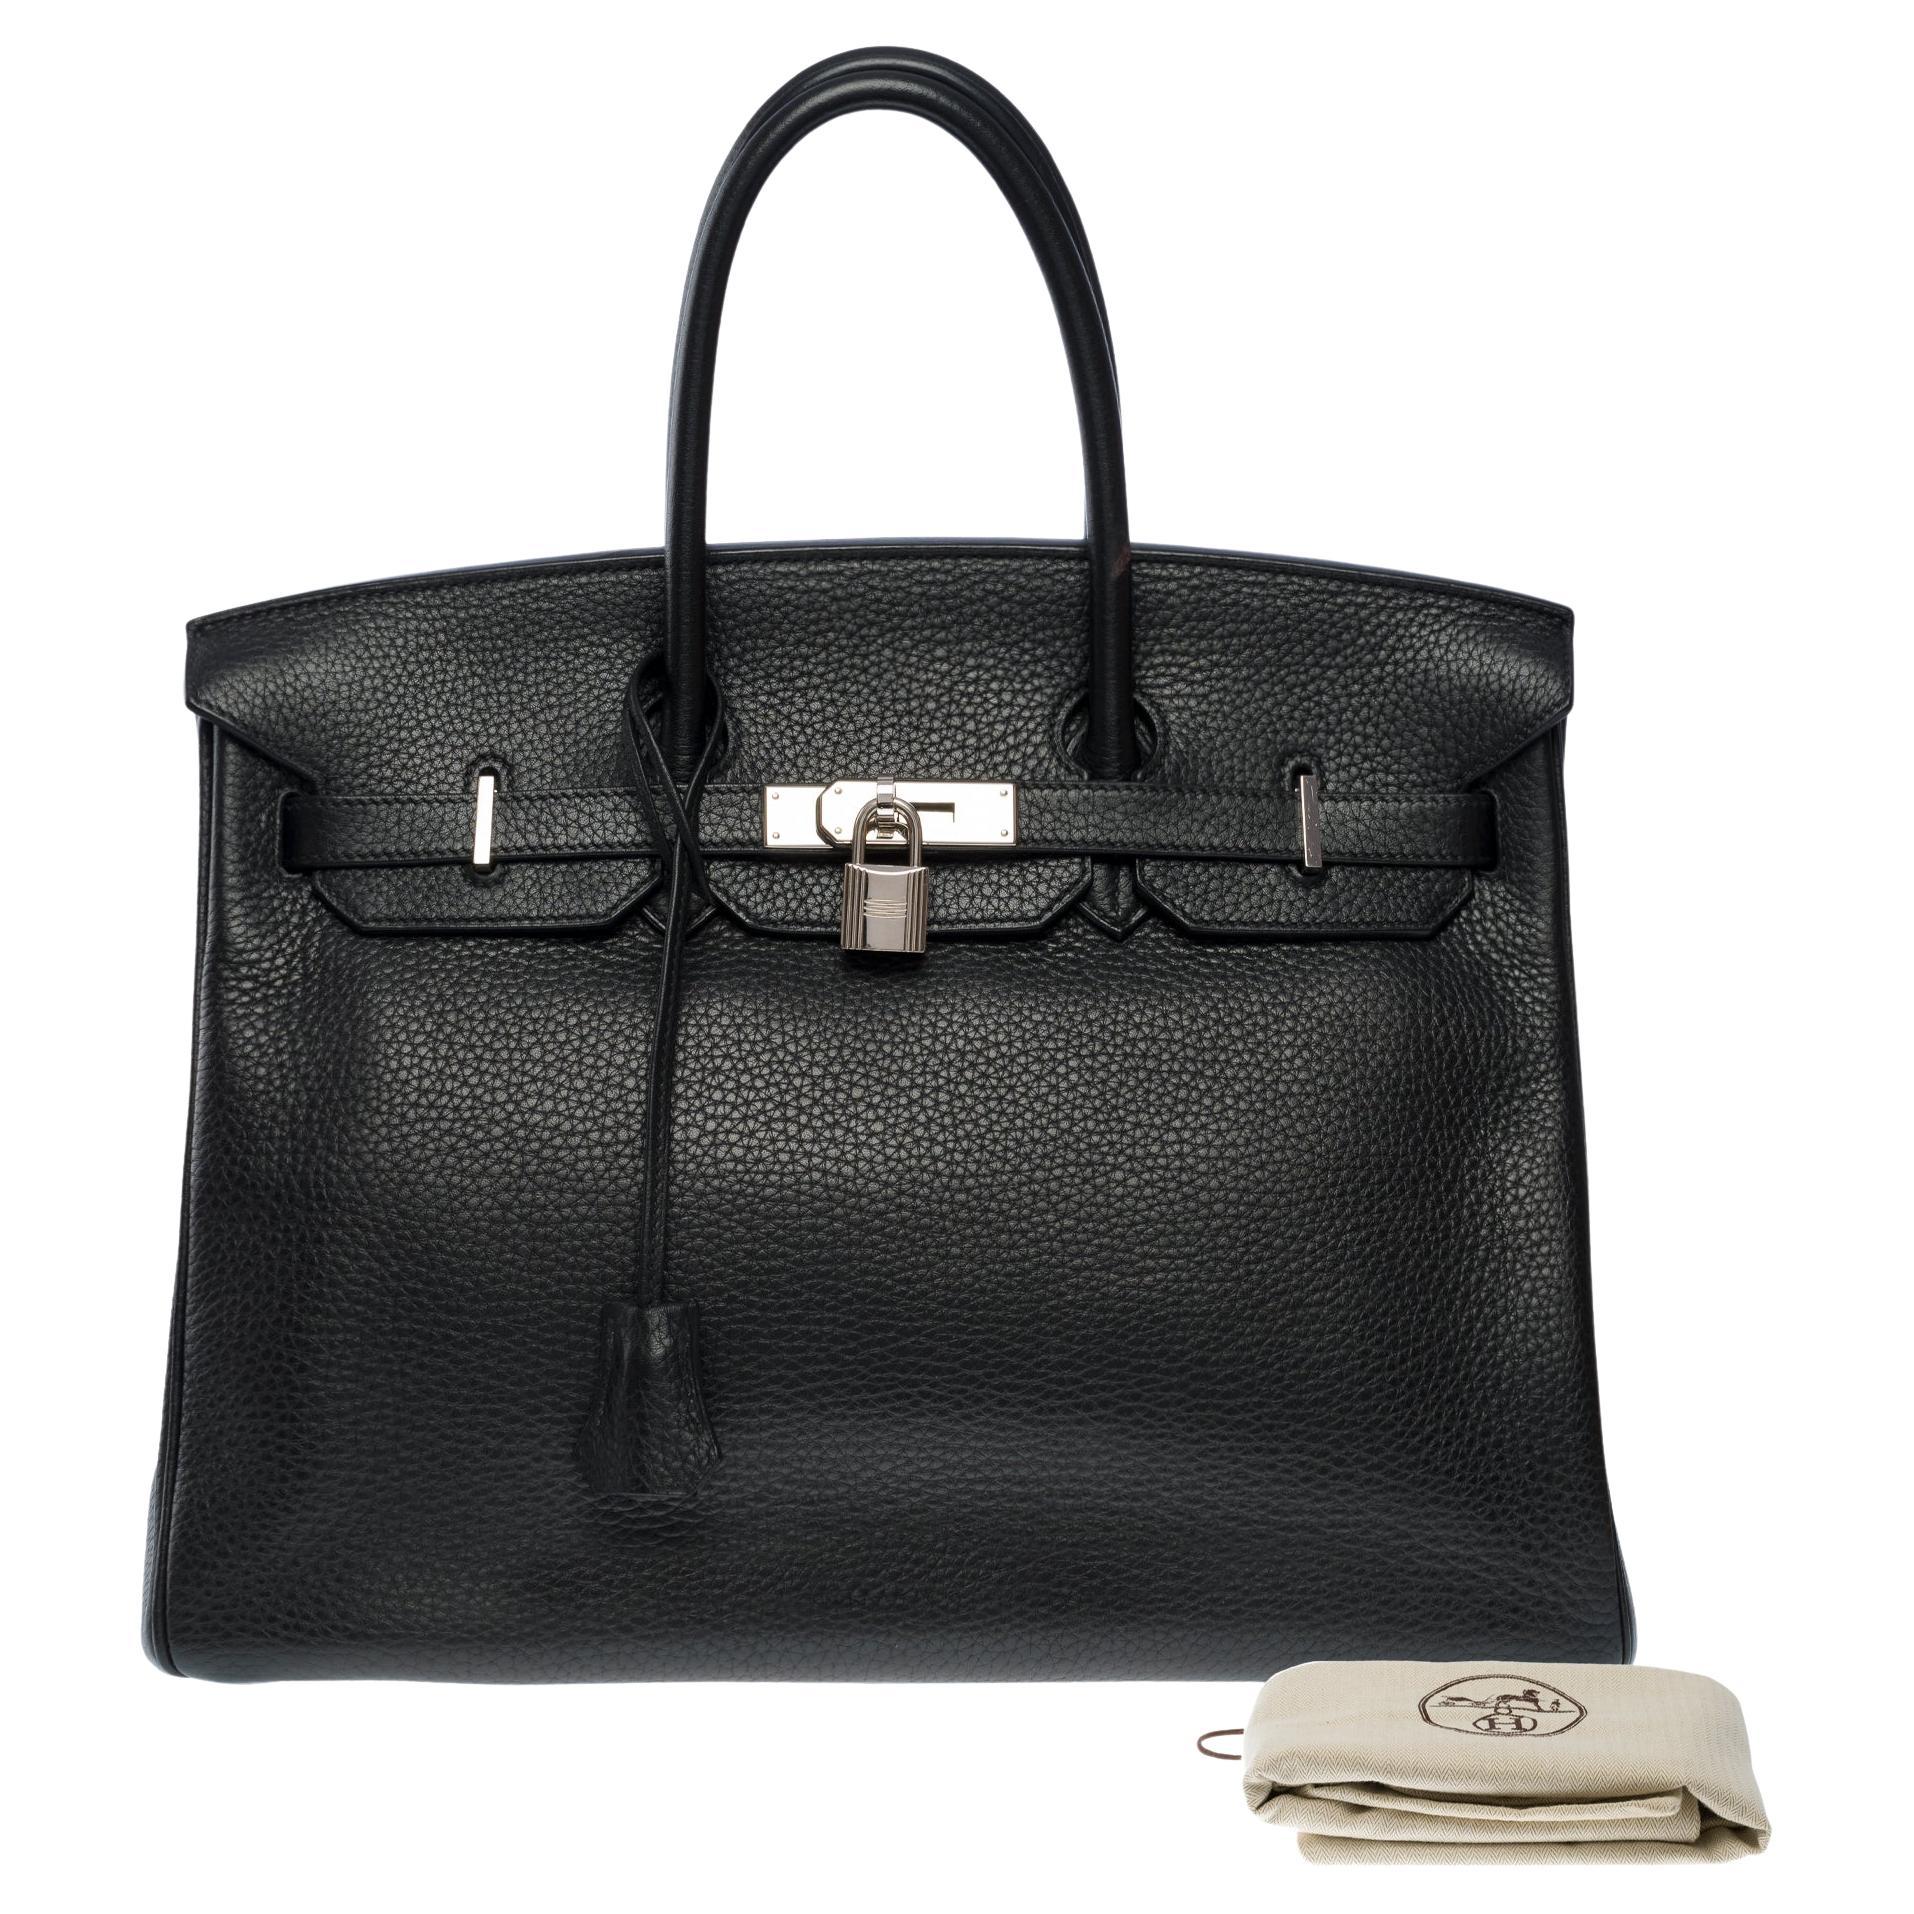 Amazing Hermès Birkin 35 handbag in black Togo leather, SHW